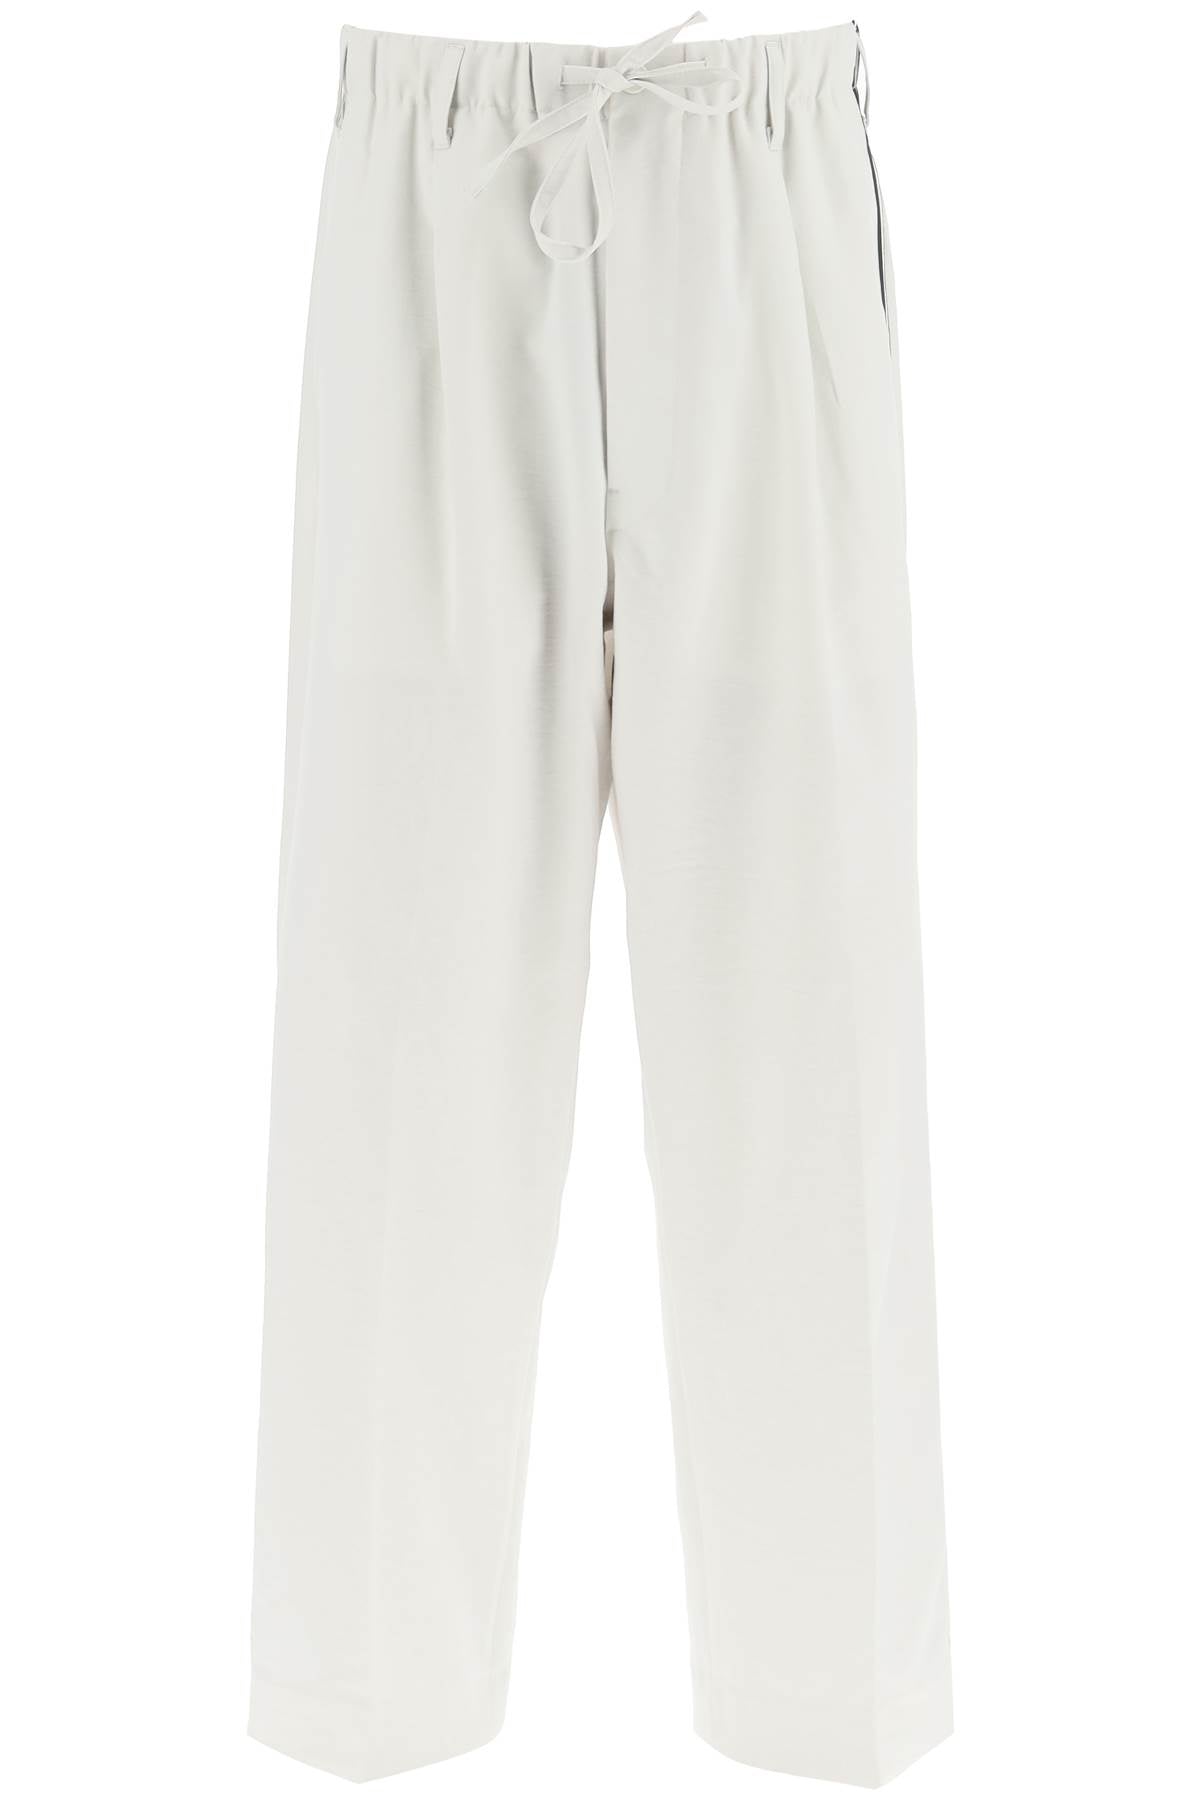 Y-3 lightweight twill pants with side stripes-Y-3-Urbanheer